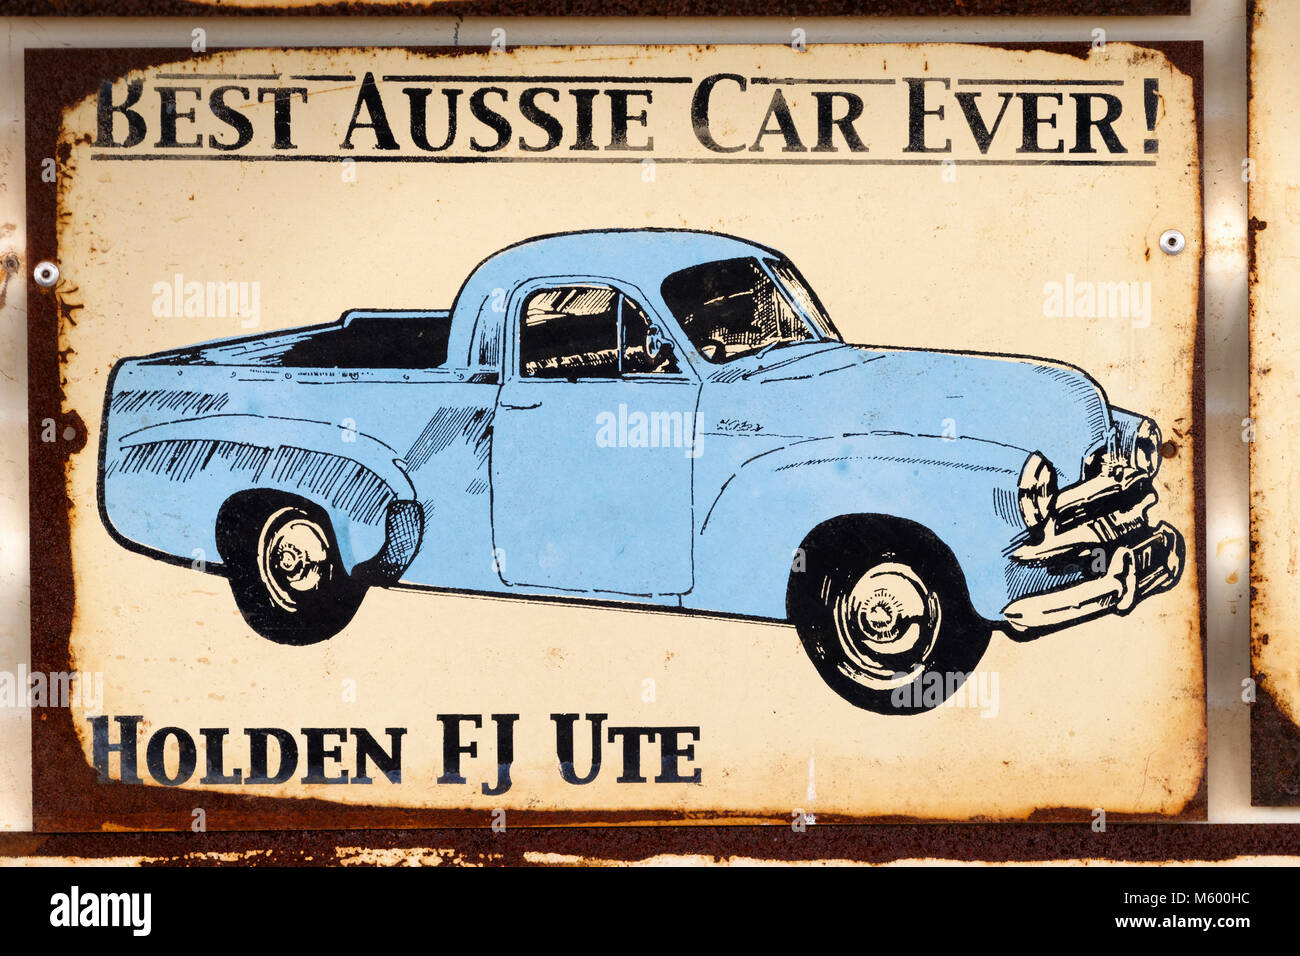 Casco histórico anuncio de automóviles de General Motors Holden, Australia Foto de stock